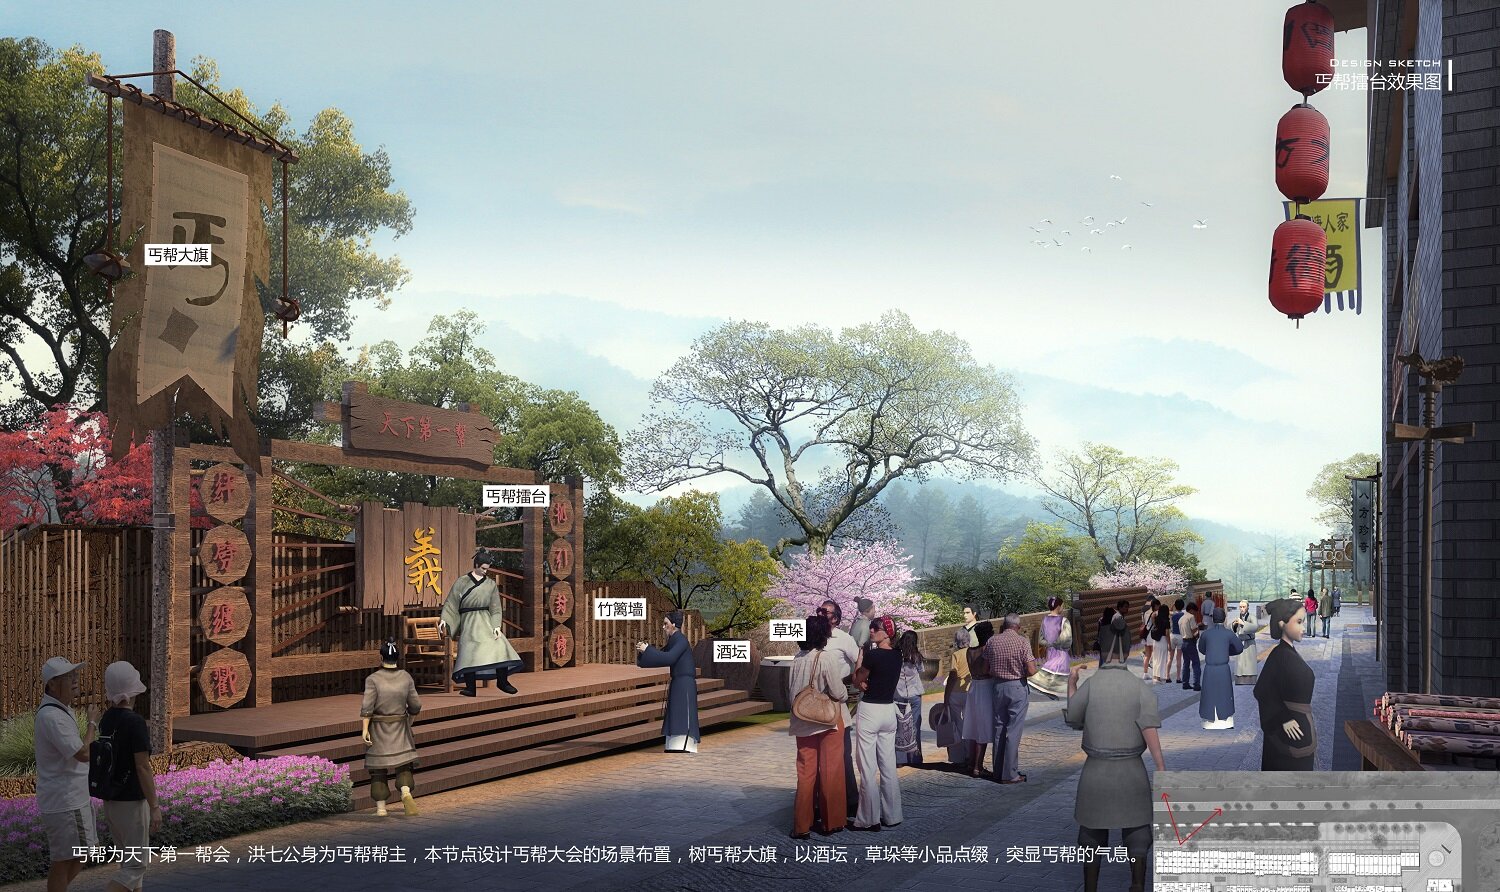 Am | design of wuxia homestay in Longmen Town, Guizhou